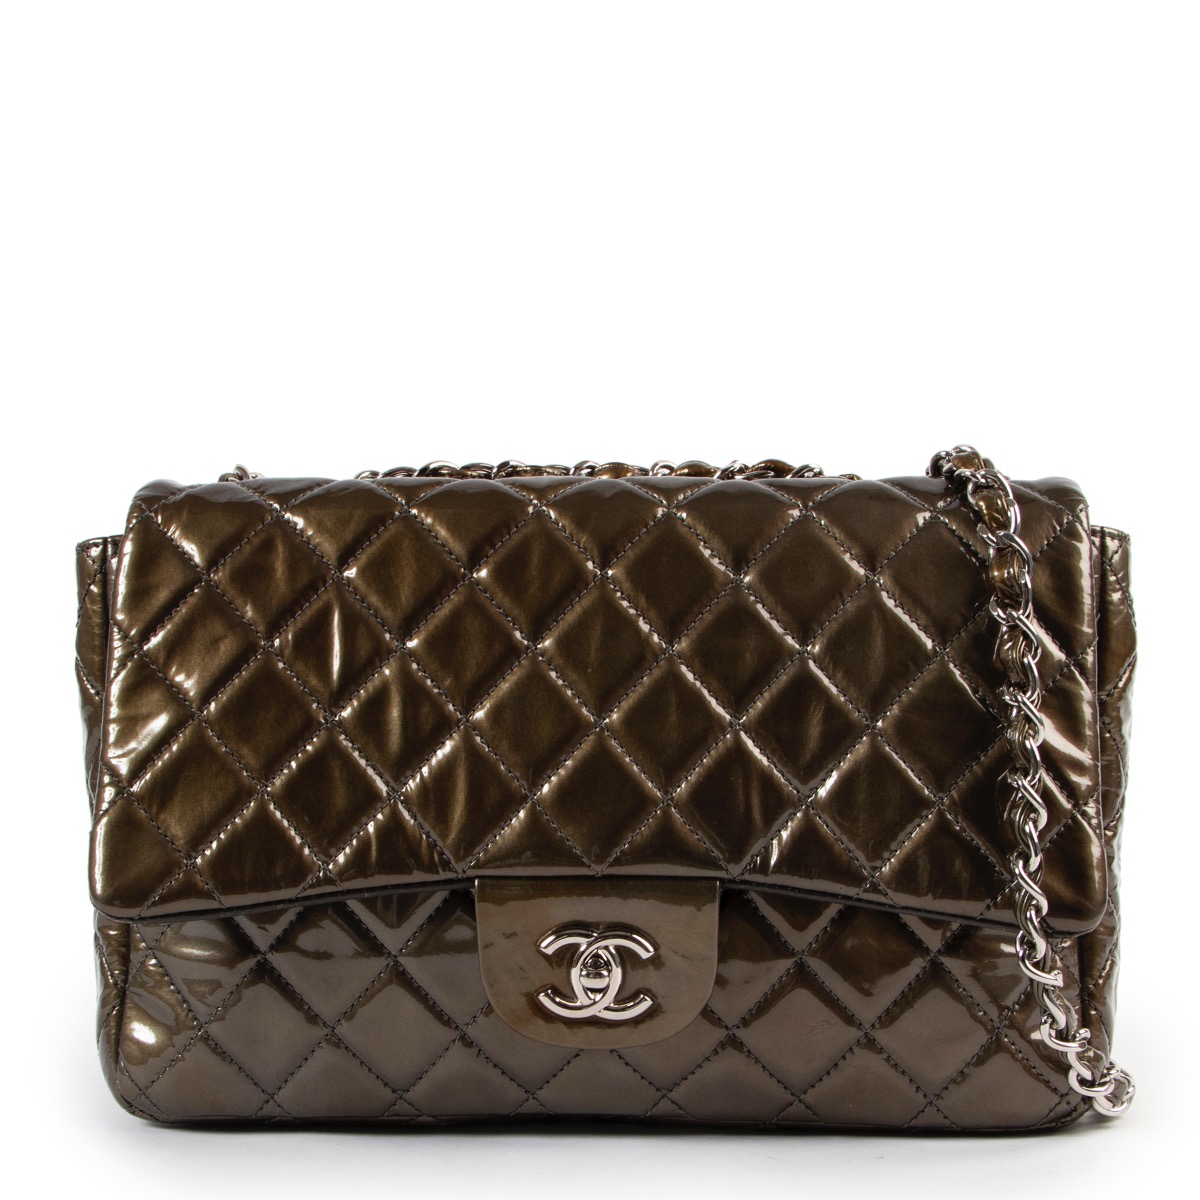 Chanel Olive Green Jumbo Classic Flap Patent Leather Handbag